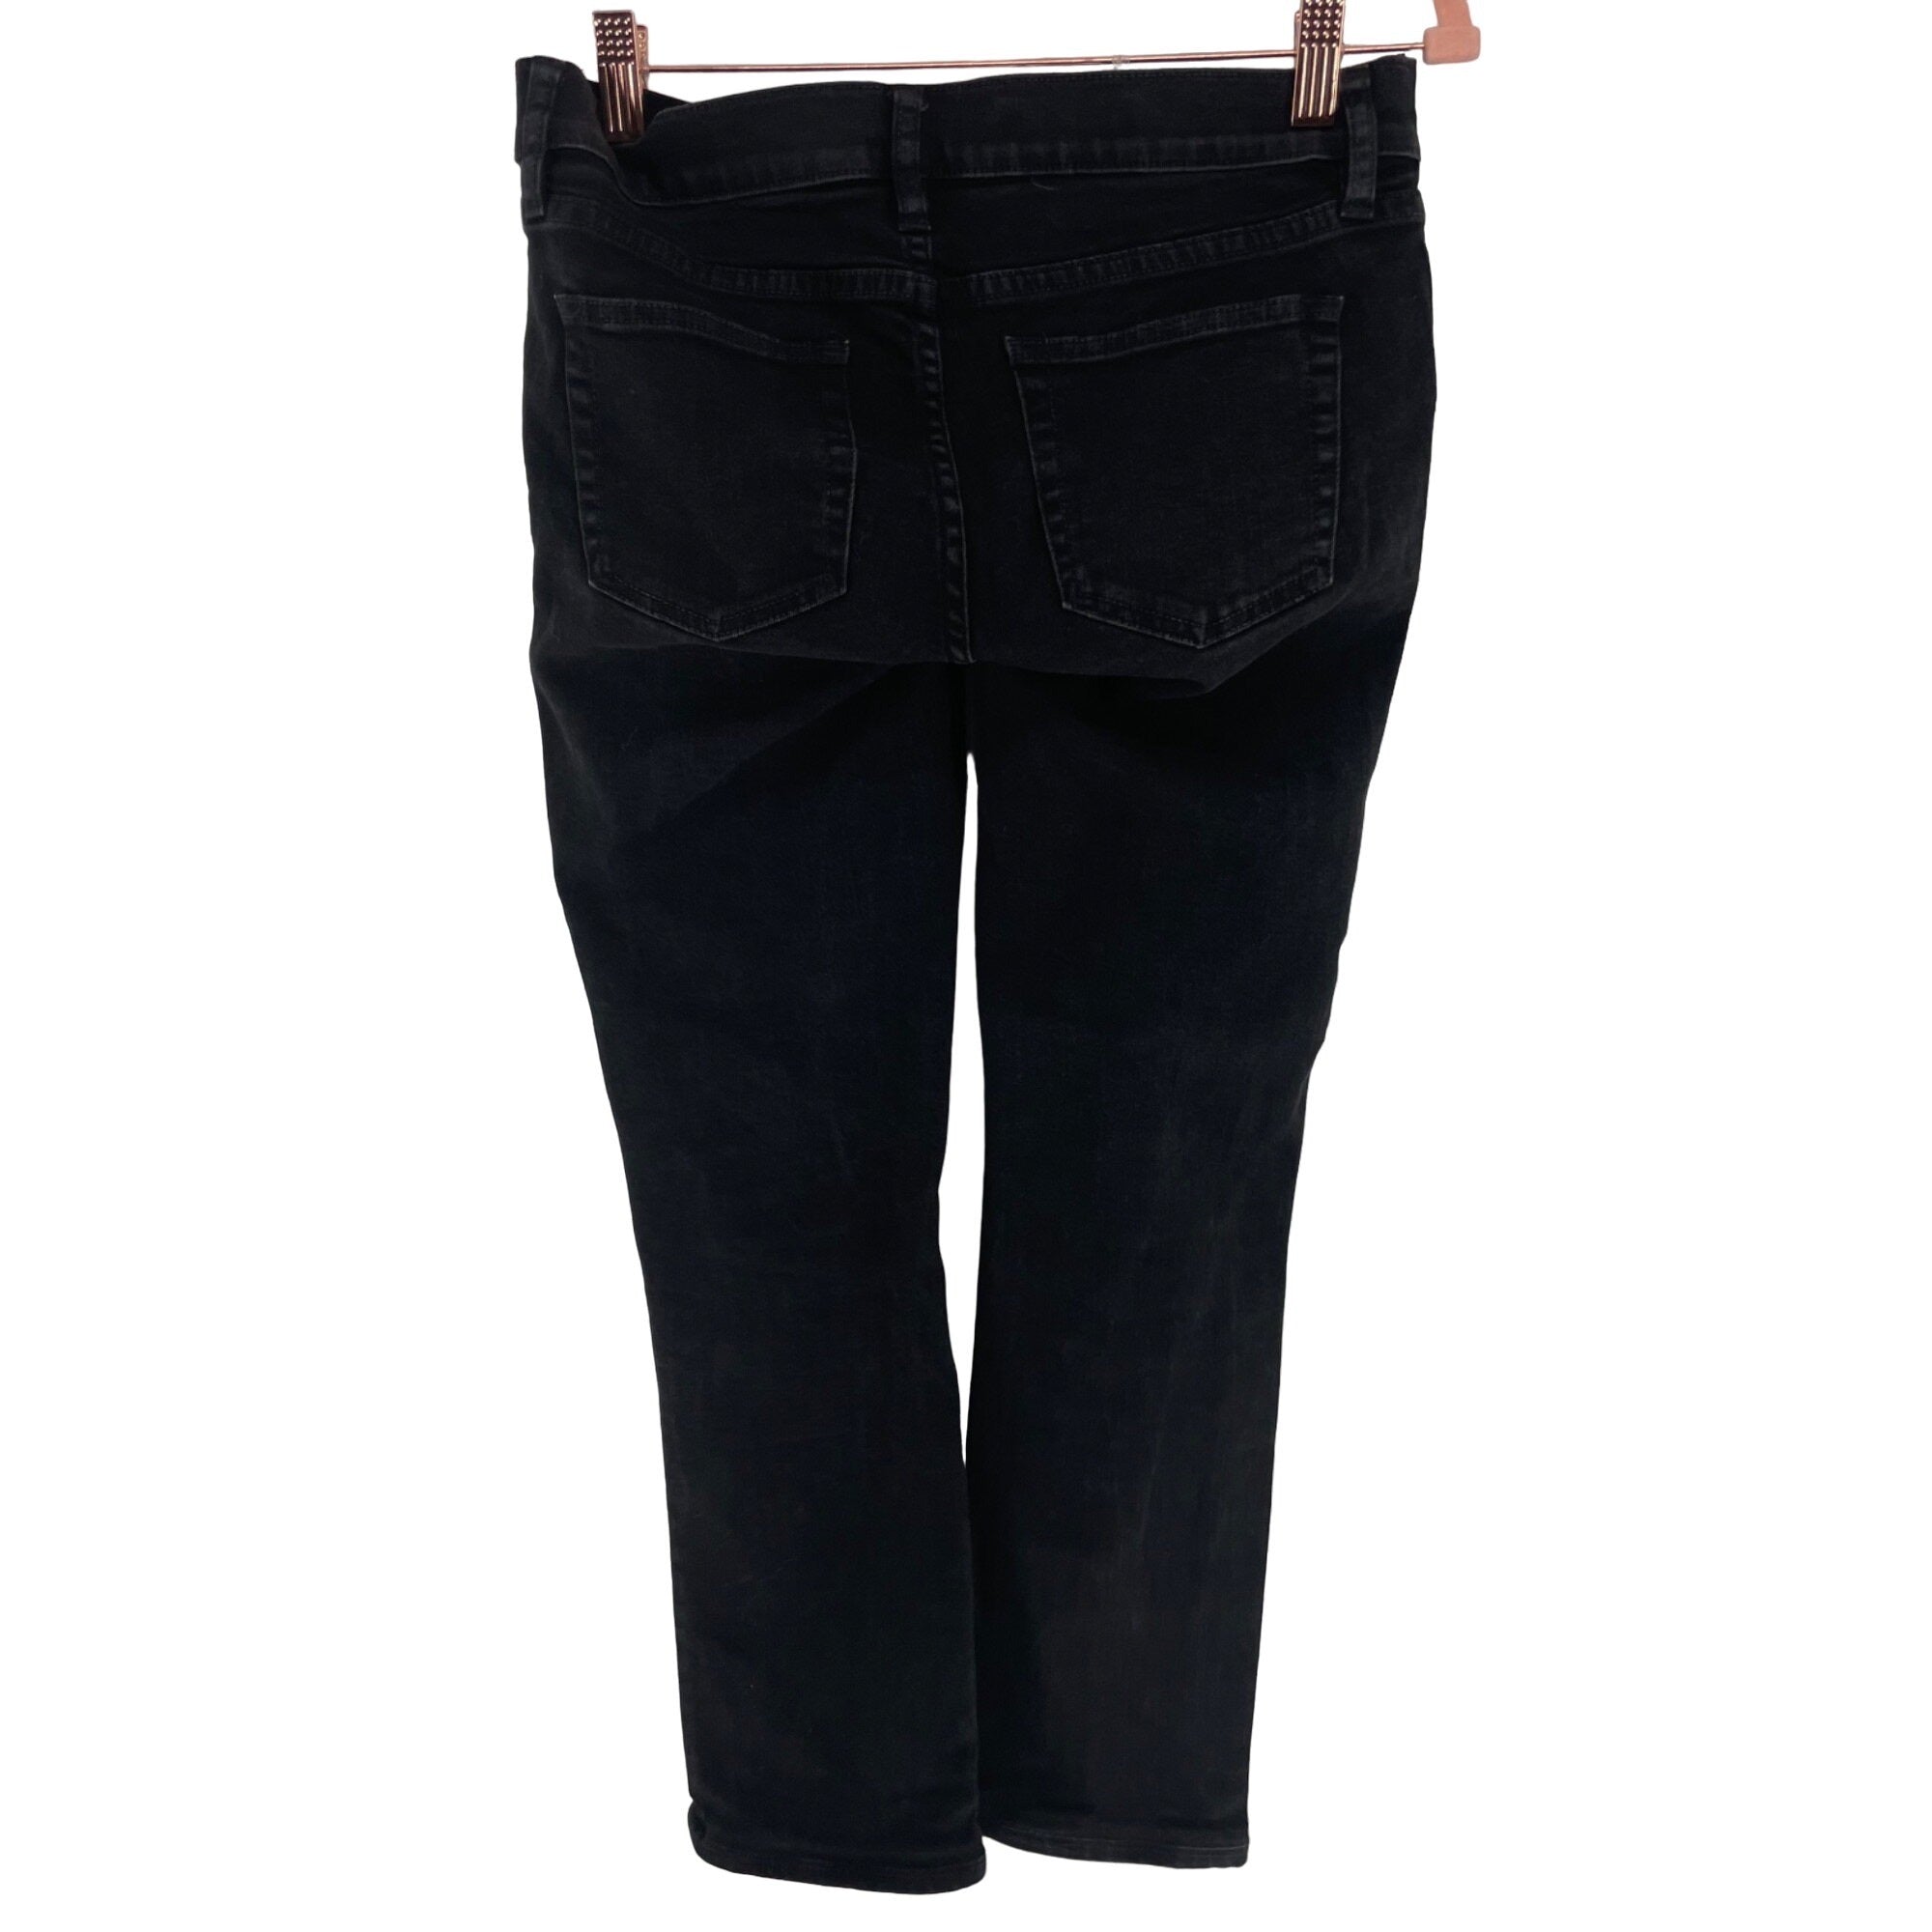 J. Crew Women's Size 26 Maternity Matchstick Black Denim Flare Jeans